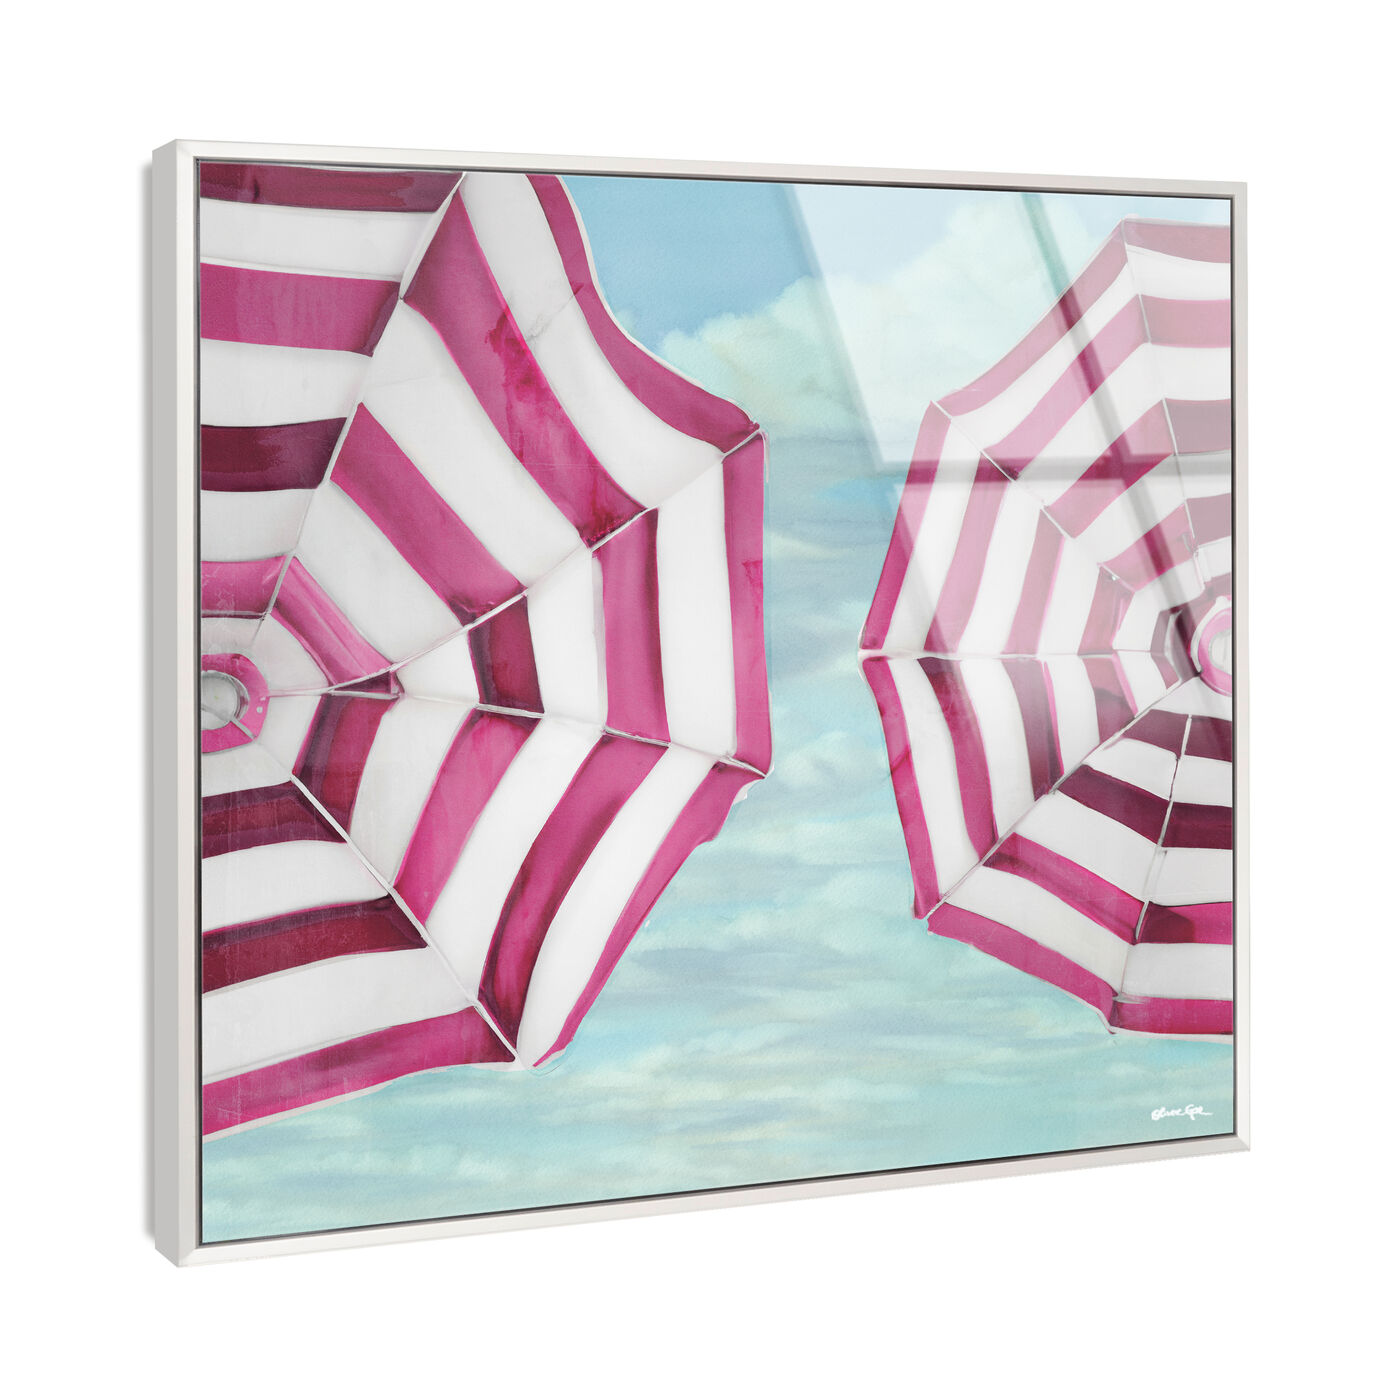 Sun Umbrellas in Miami - Framed Acrylic Art